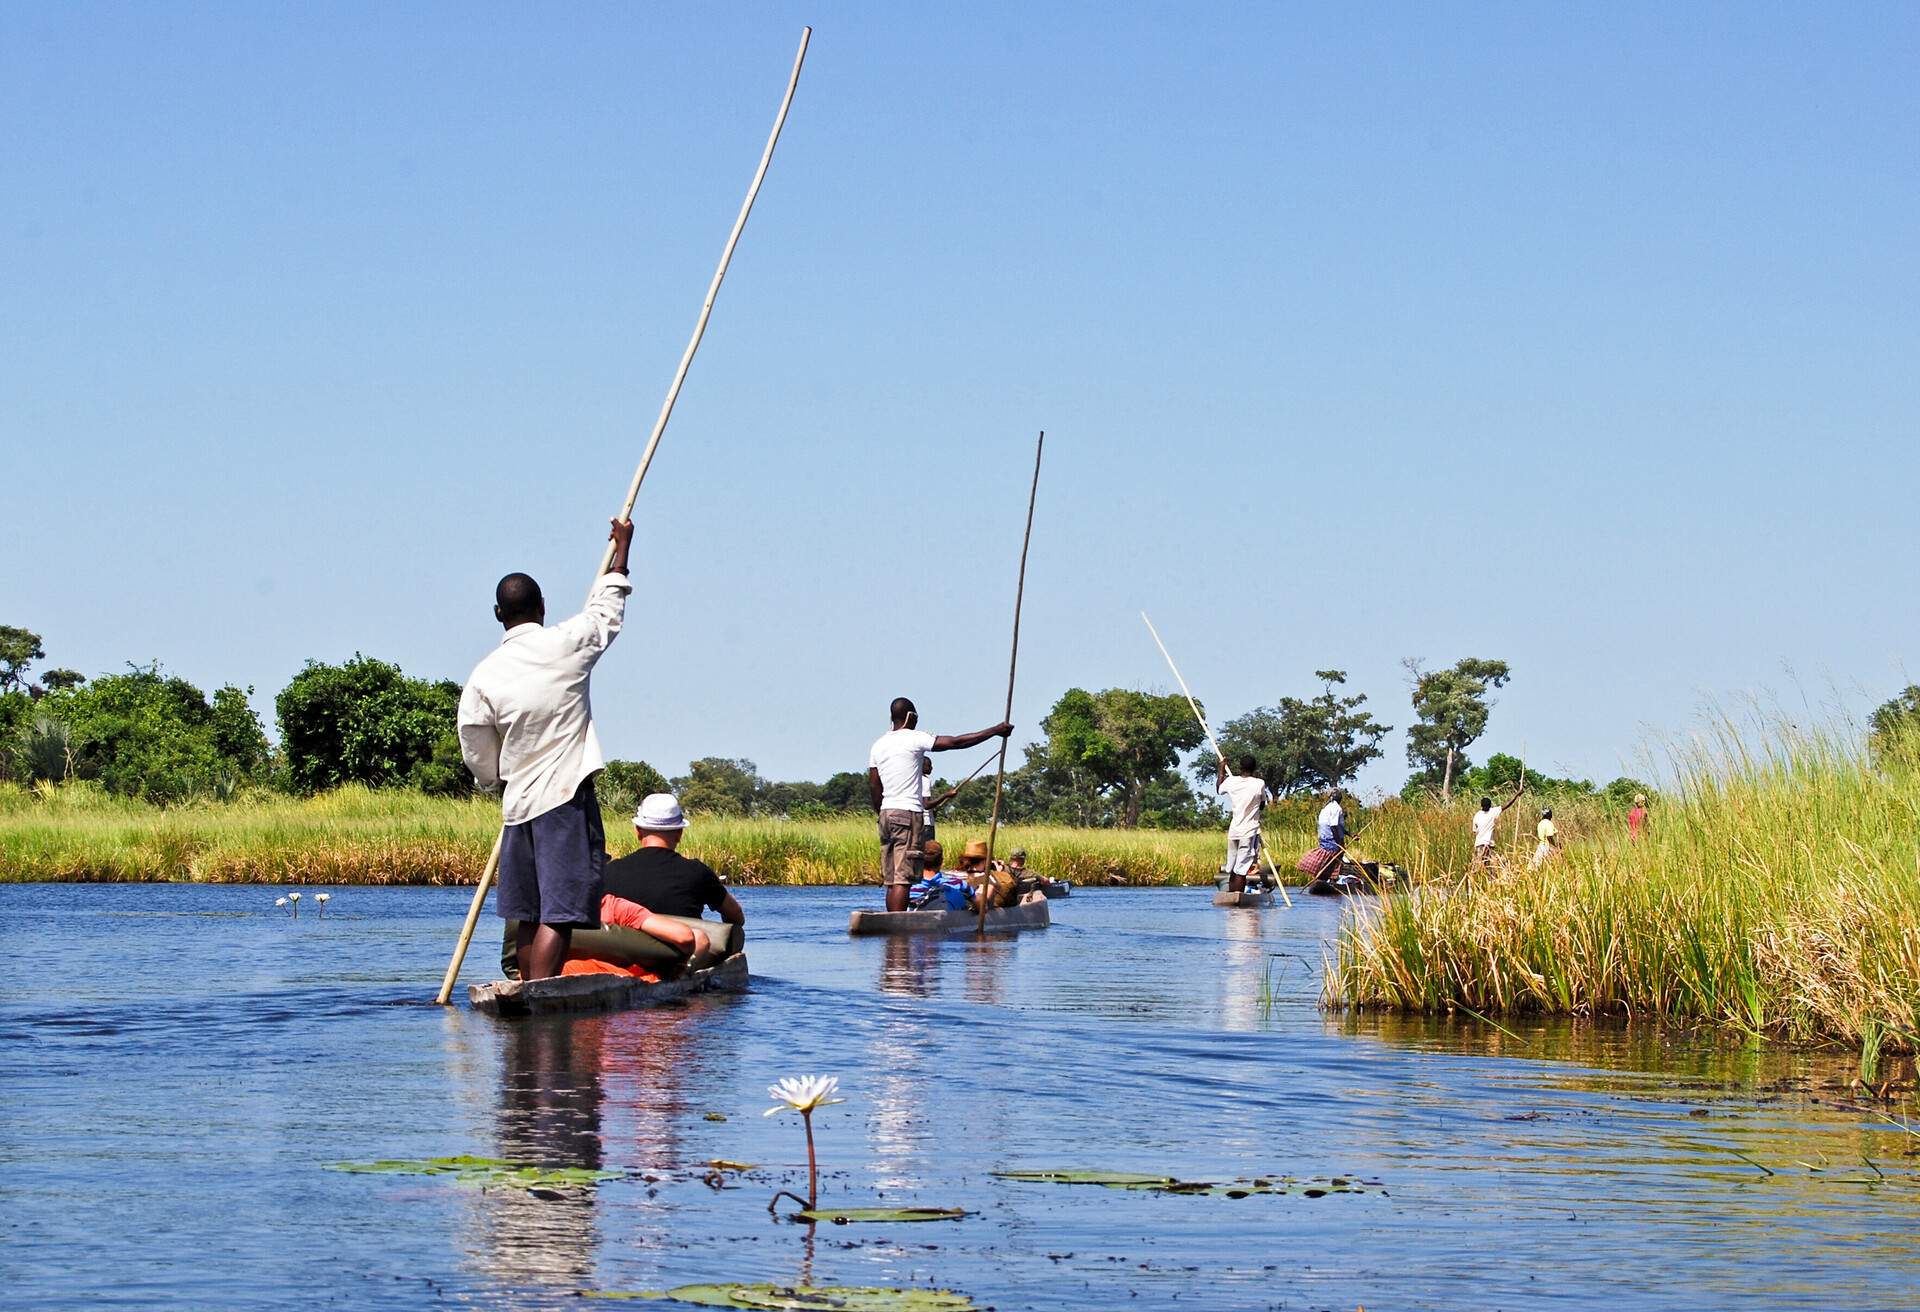 Canoe trip with traditional mokoro boat on the river through Okavango Delta near Maun, Botswana Africa